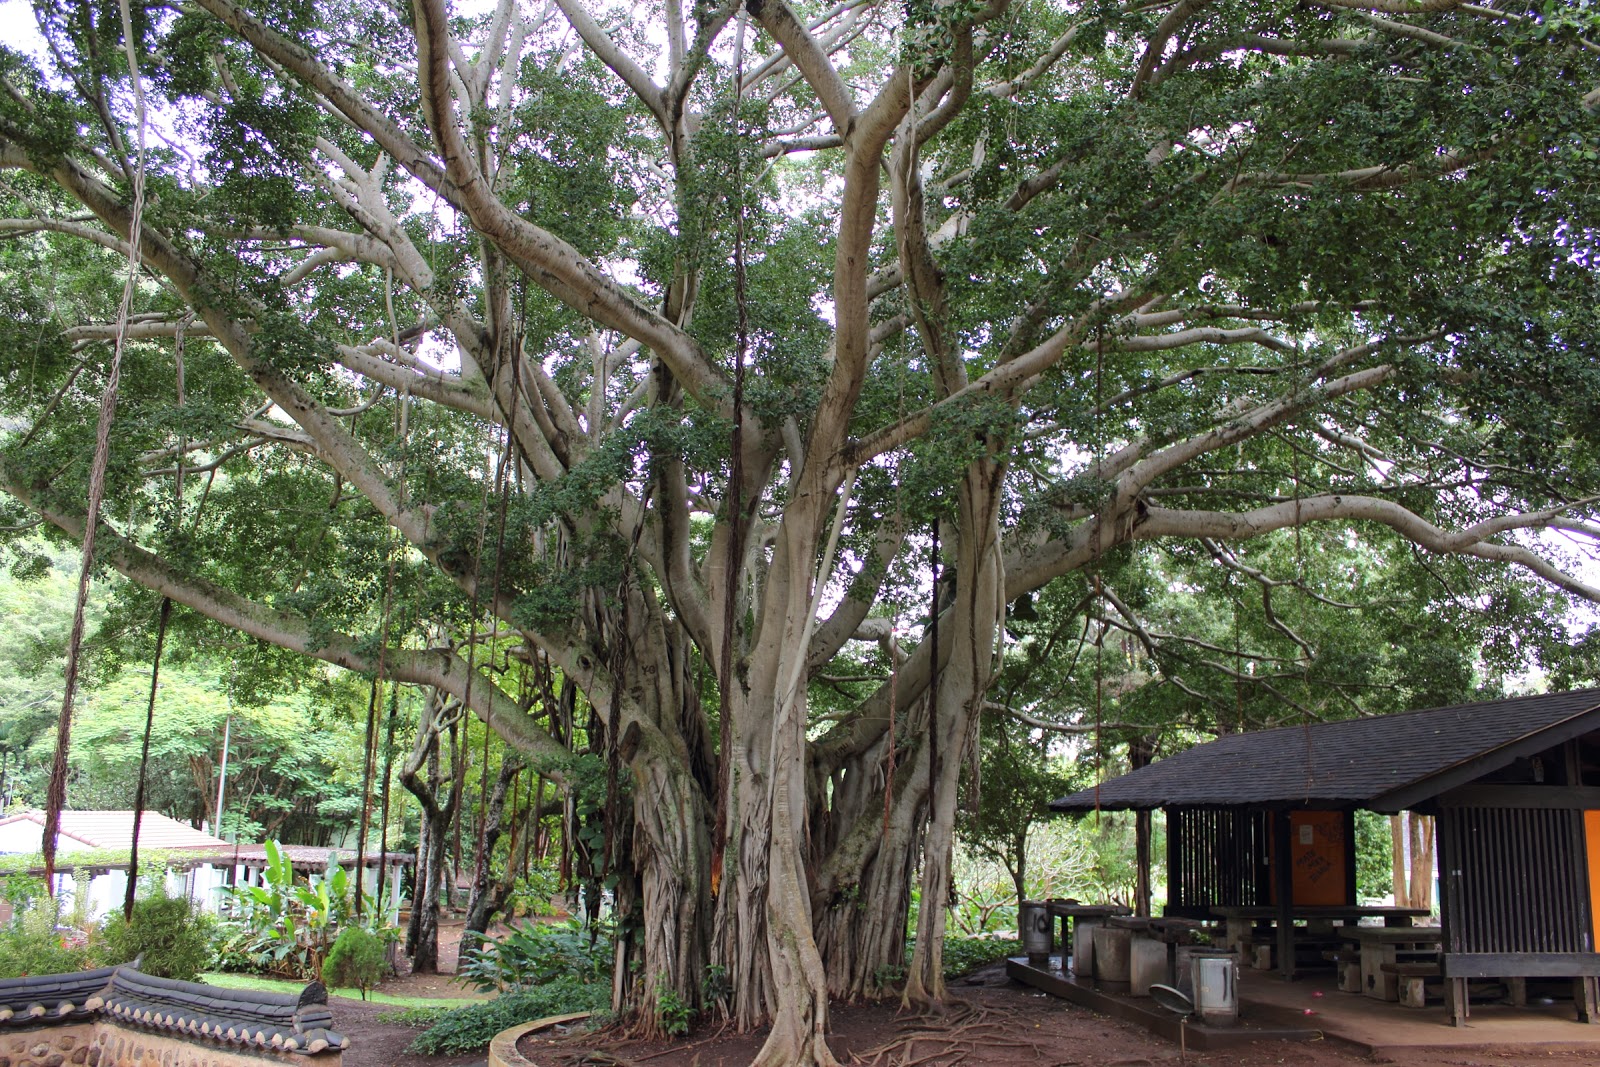 Banyan Tree in Kepaniwai Park